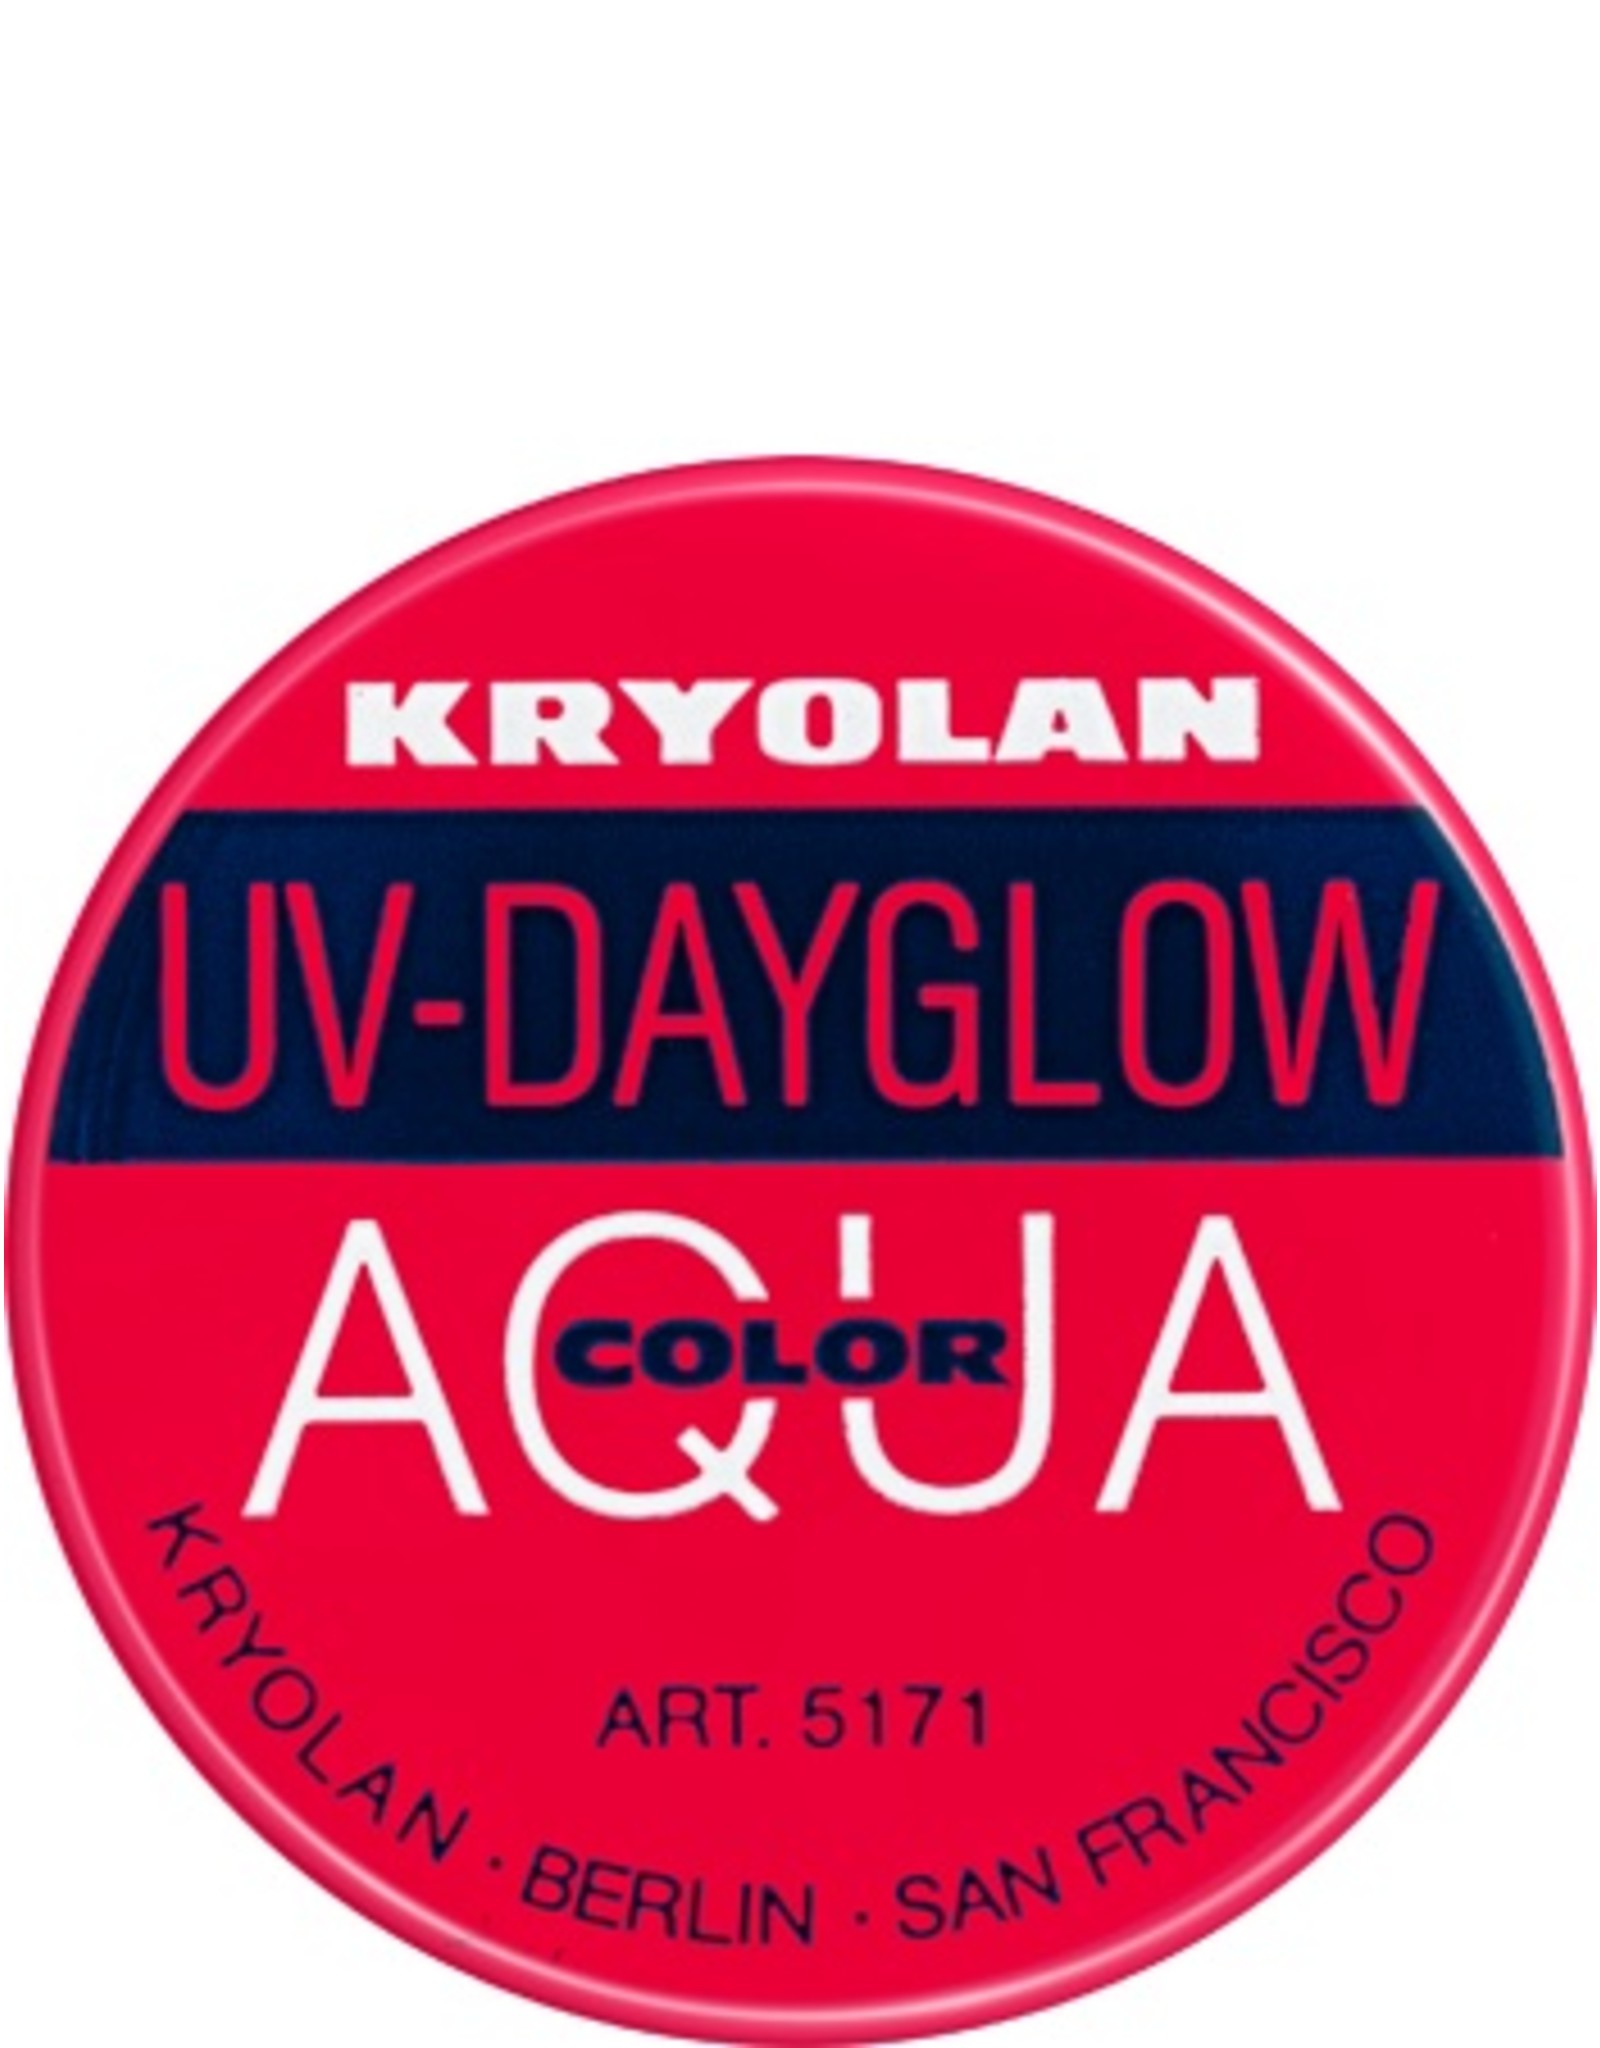 Kryolan Kryolan Aquacolor - UV-Dayglow